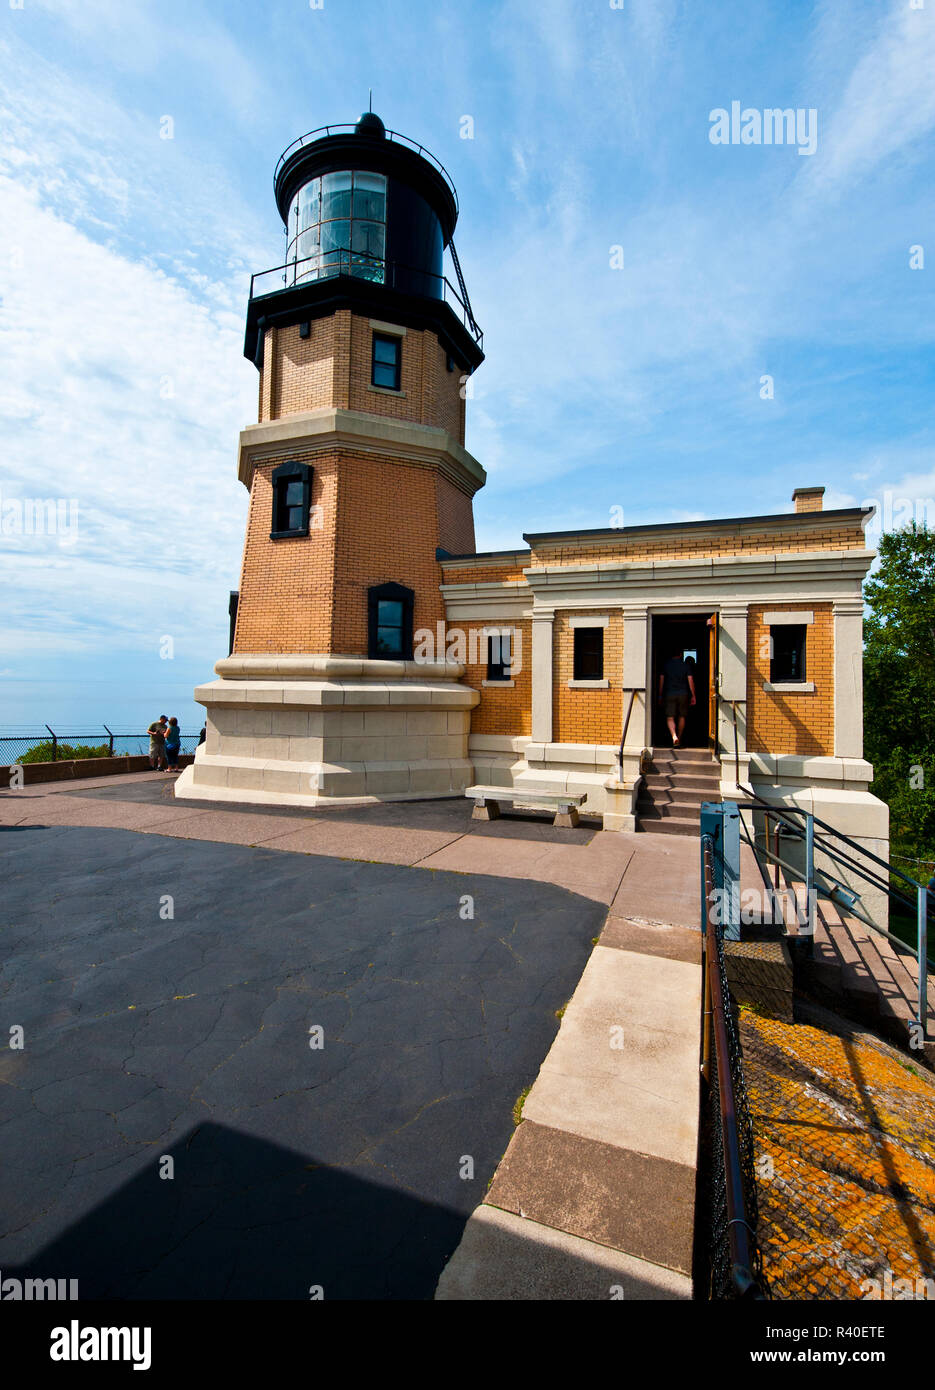 USA, Minnesota, North Shore, Lake Superior, Split Rock Lighthouse Station, Turm und Nebel Signal Gebäude Stockfoto